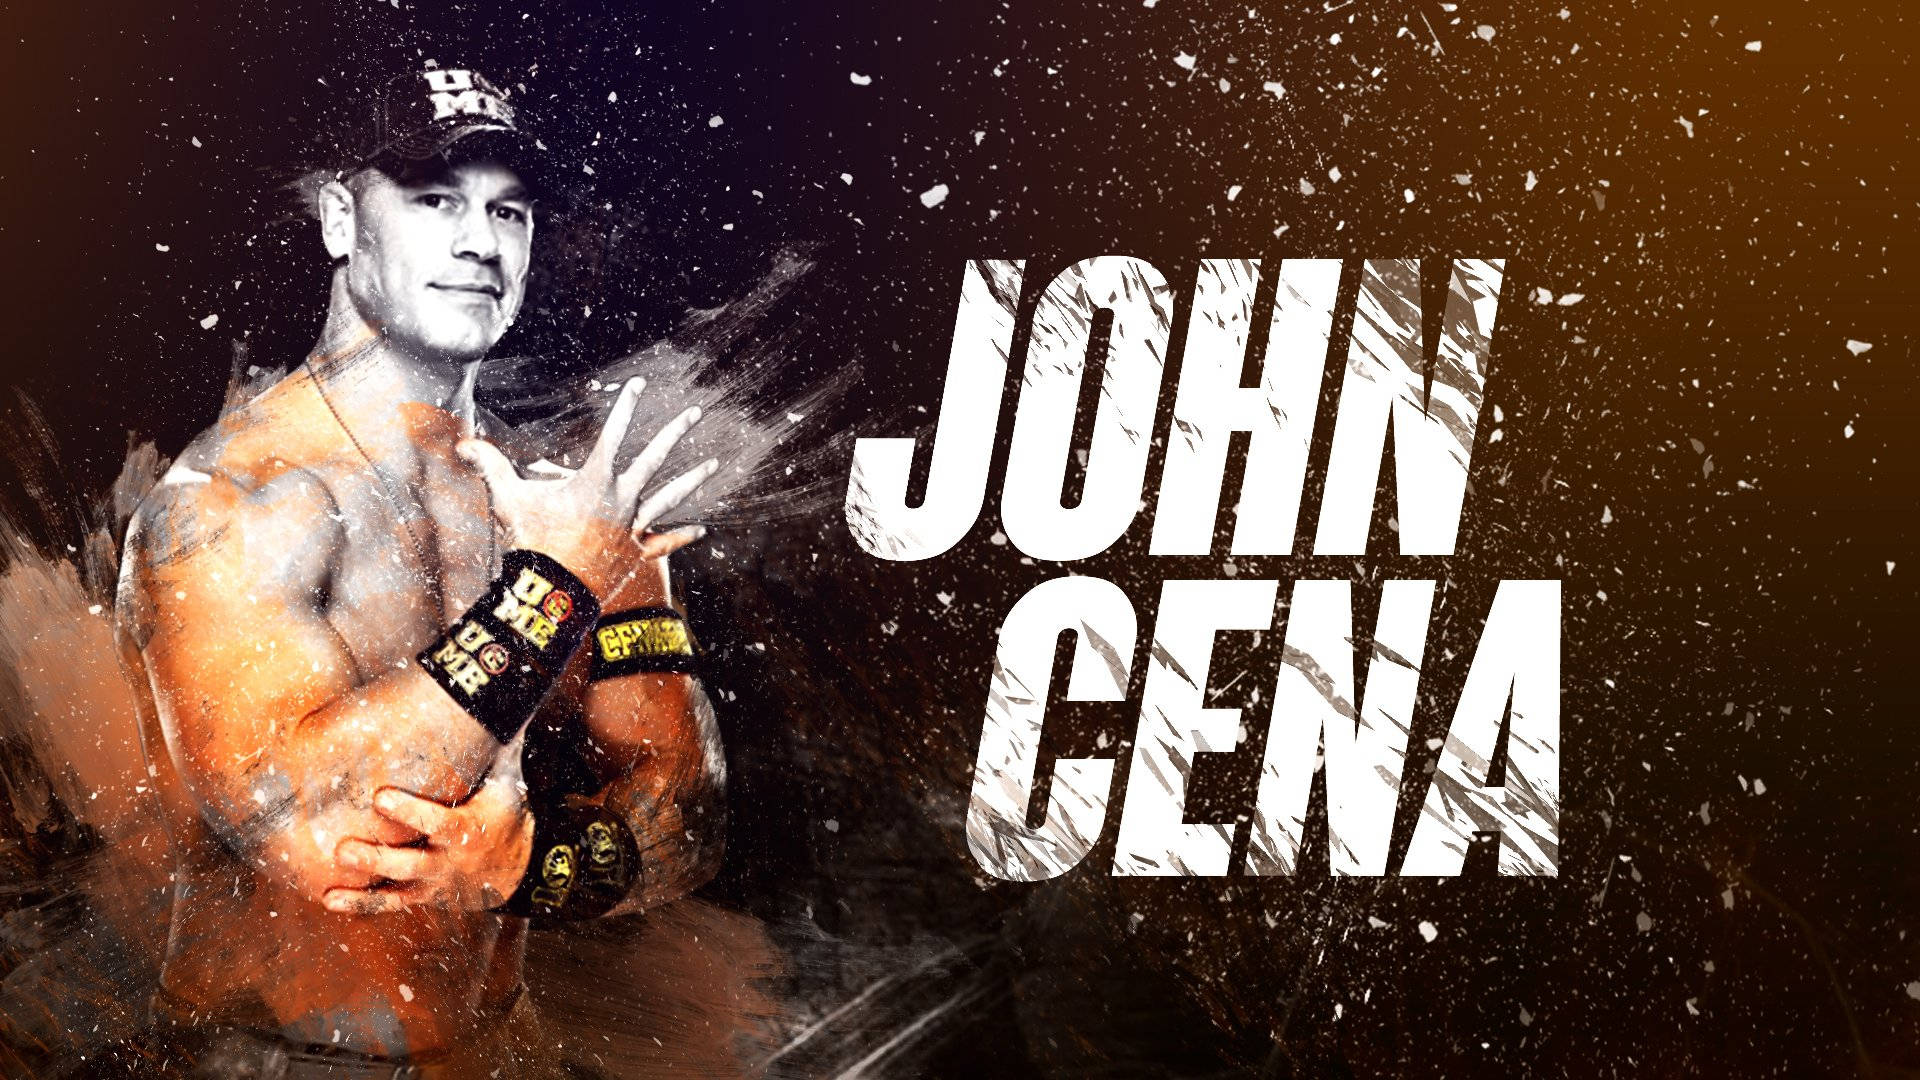 Free John Cena Wallpaper Downloads, [100+] John Cena Wallpapers for FREE |  